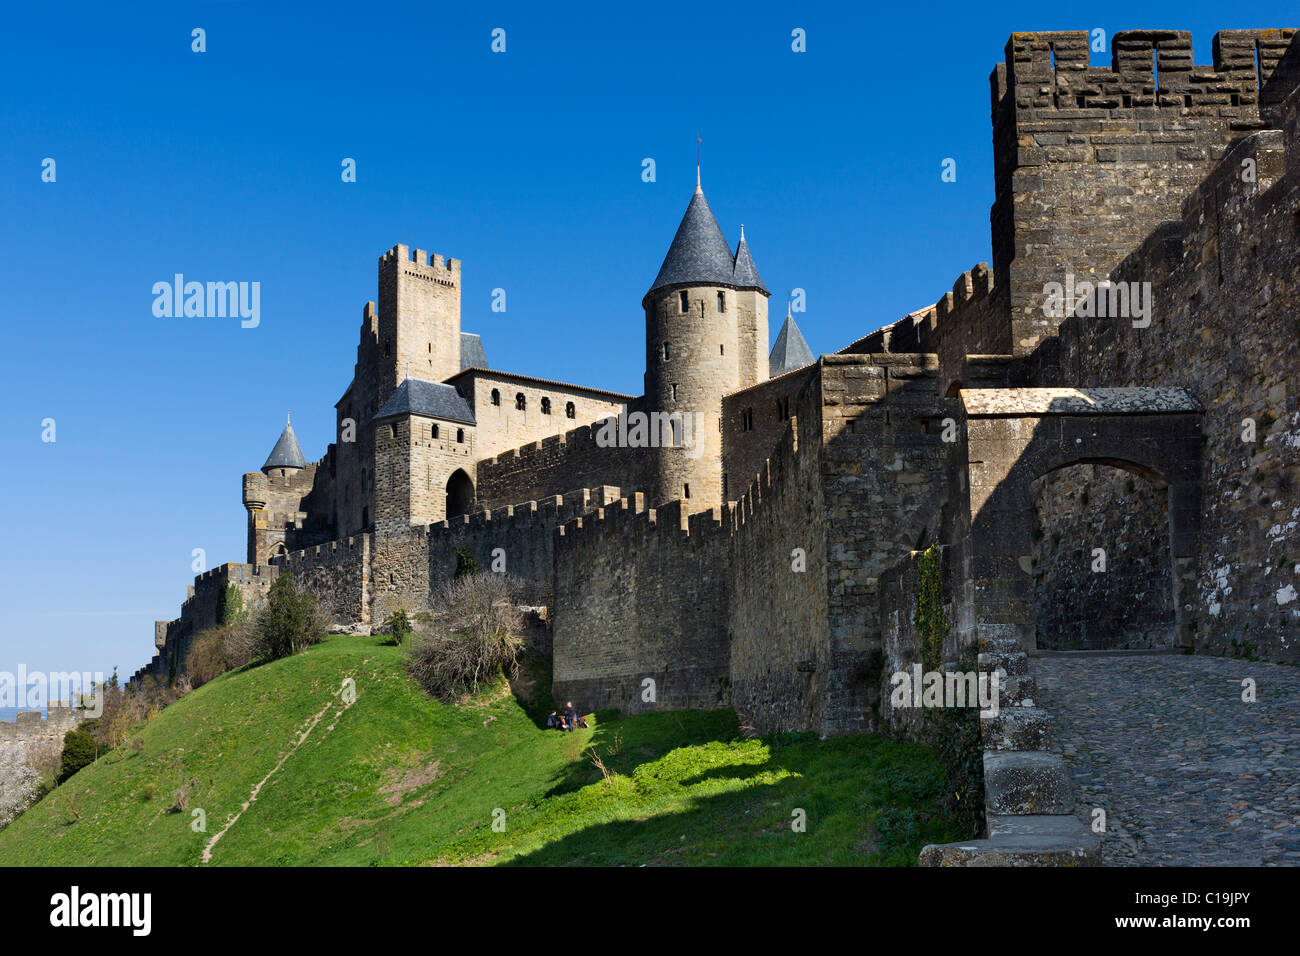 La Porte de l'Aude e Chateau Comtal nel medievale città murata (CITE) di Carcassonne, Languedoc, Francia Foto Stock